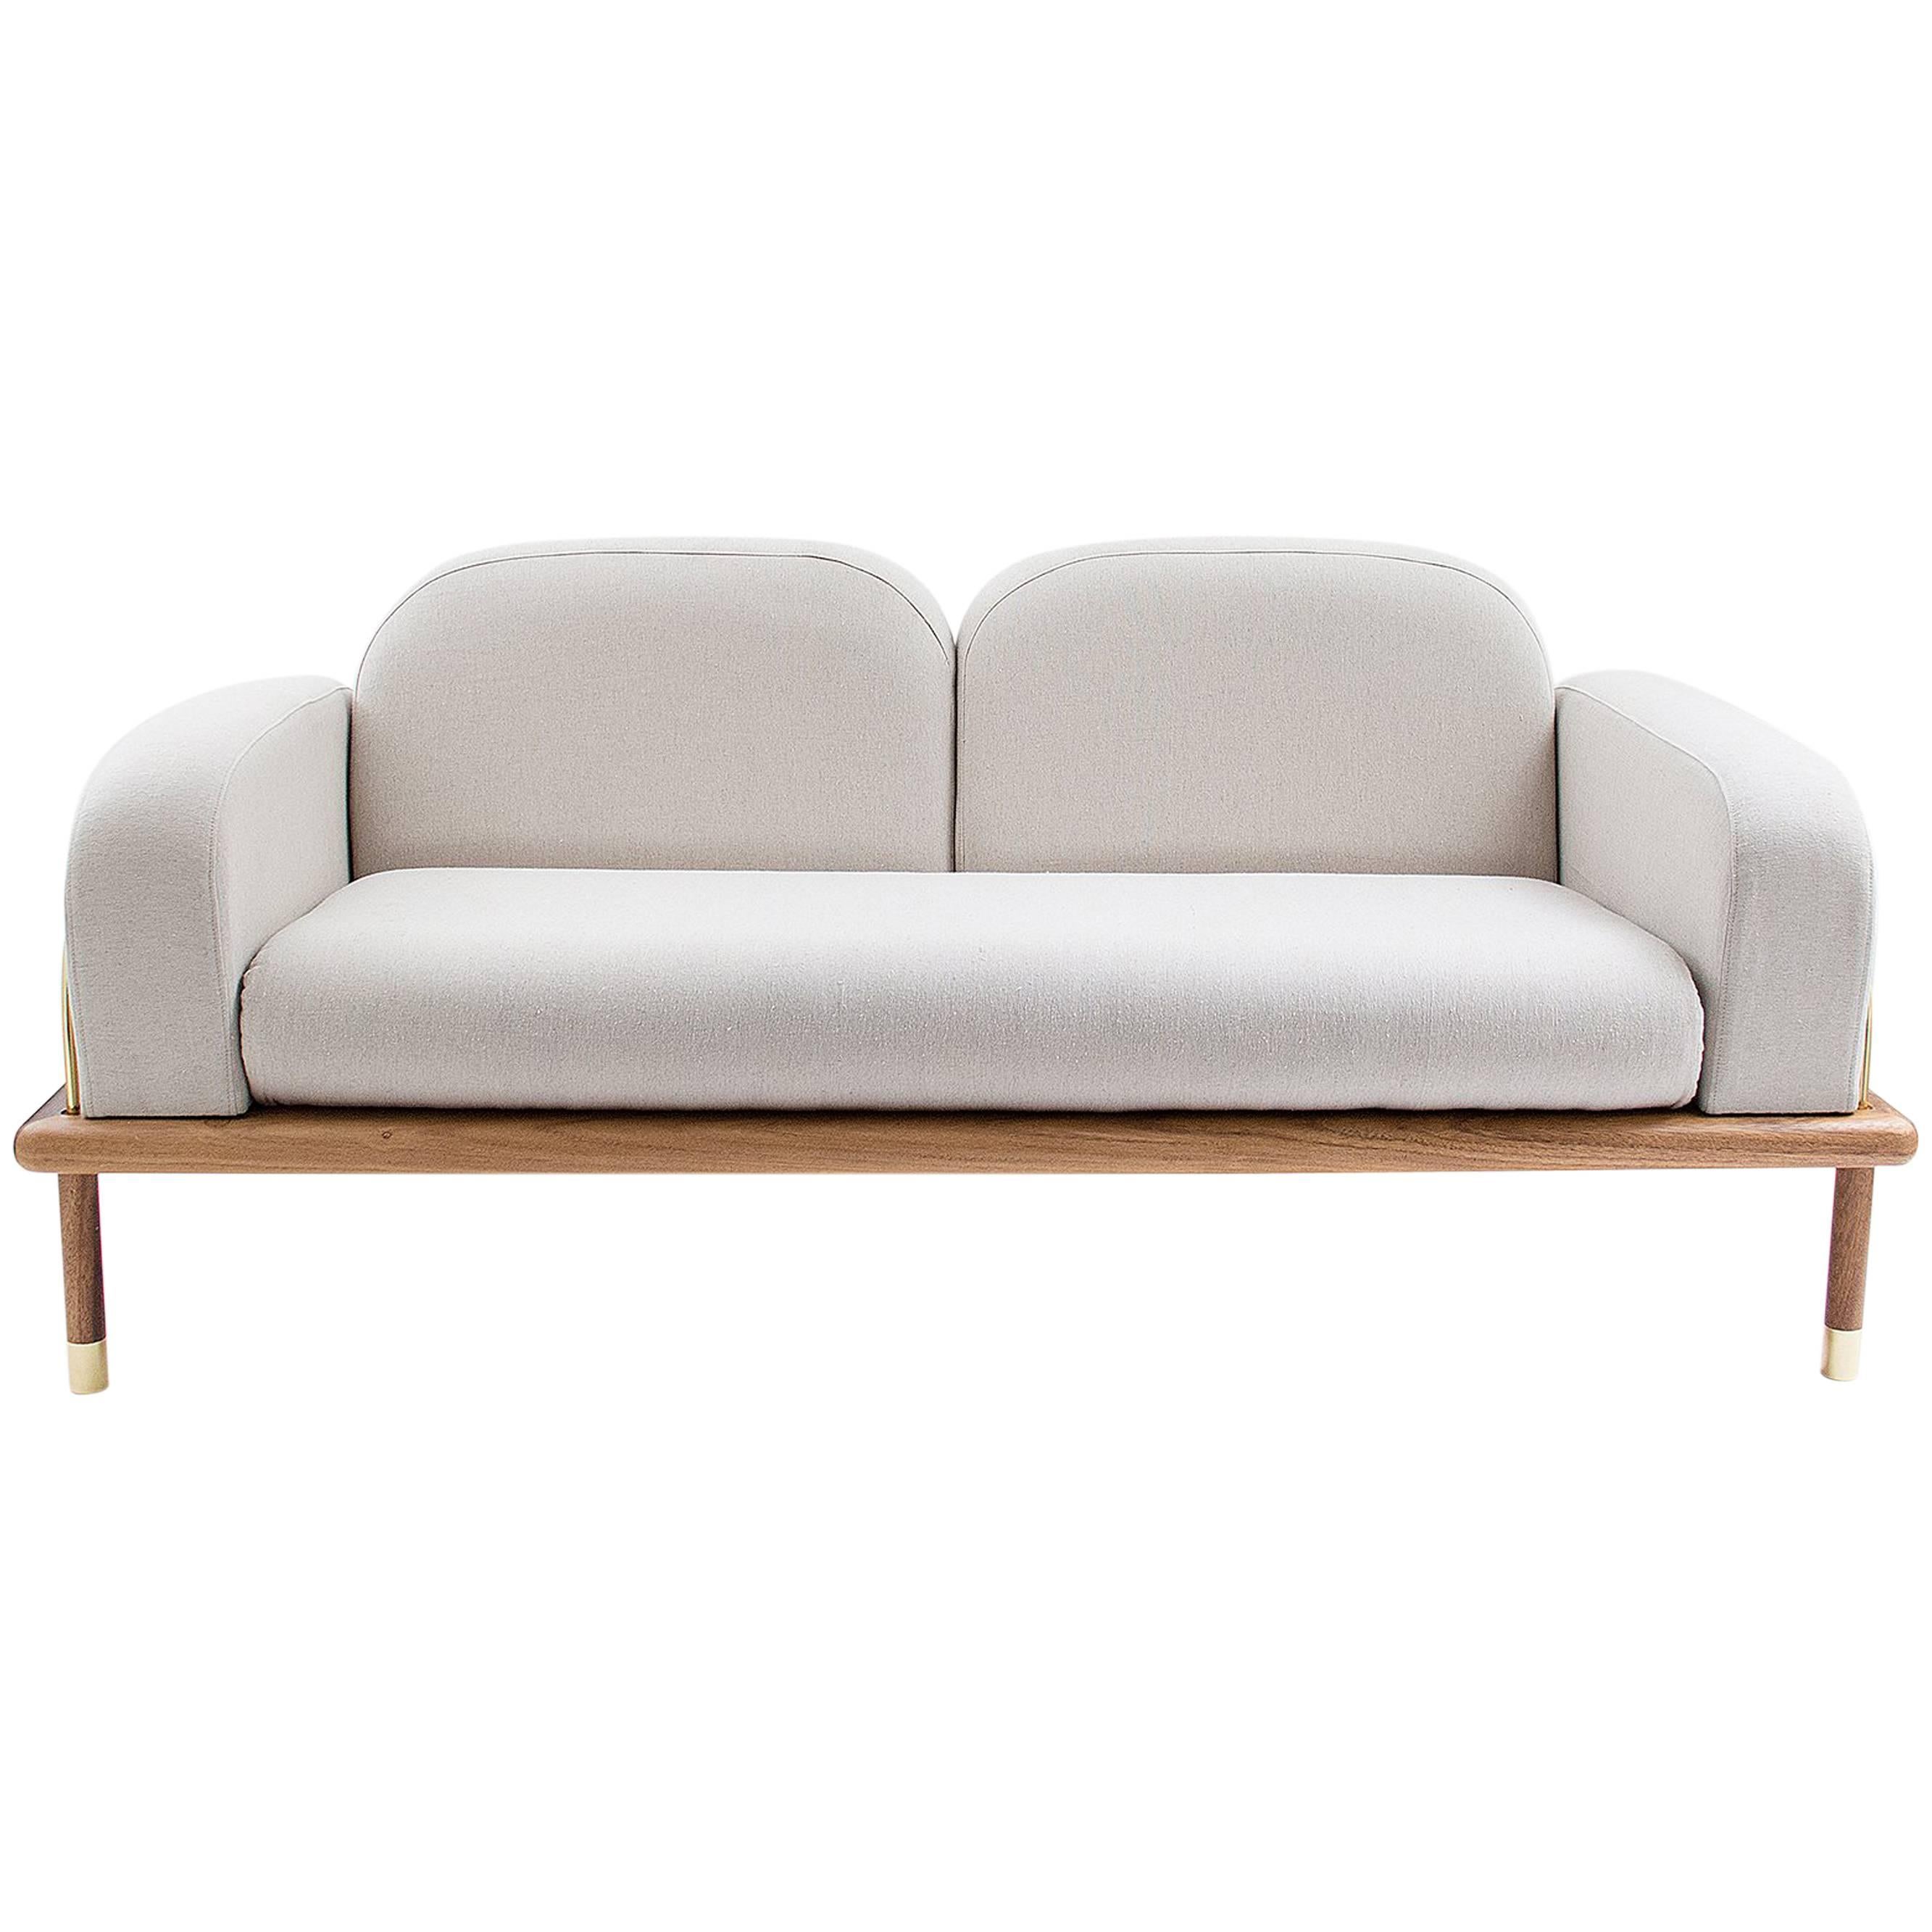 "Prado" Sofa Mexican Contemporary design in Parota Wood, Copper or Brass Detail For Sale